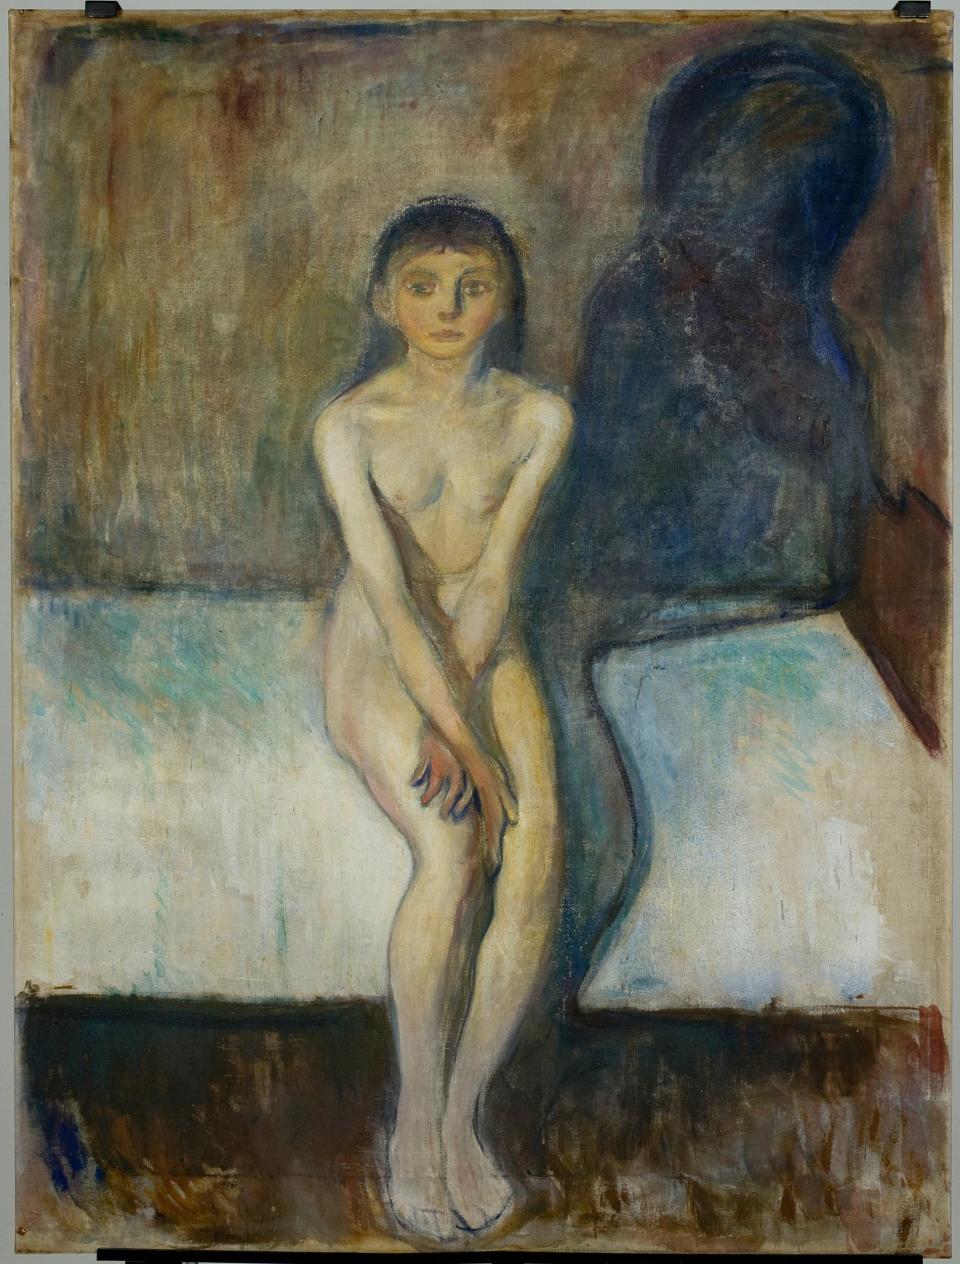 Puberty, 1894, Edvard Munch (Munch Museum)